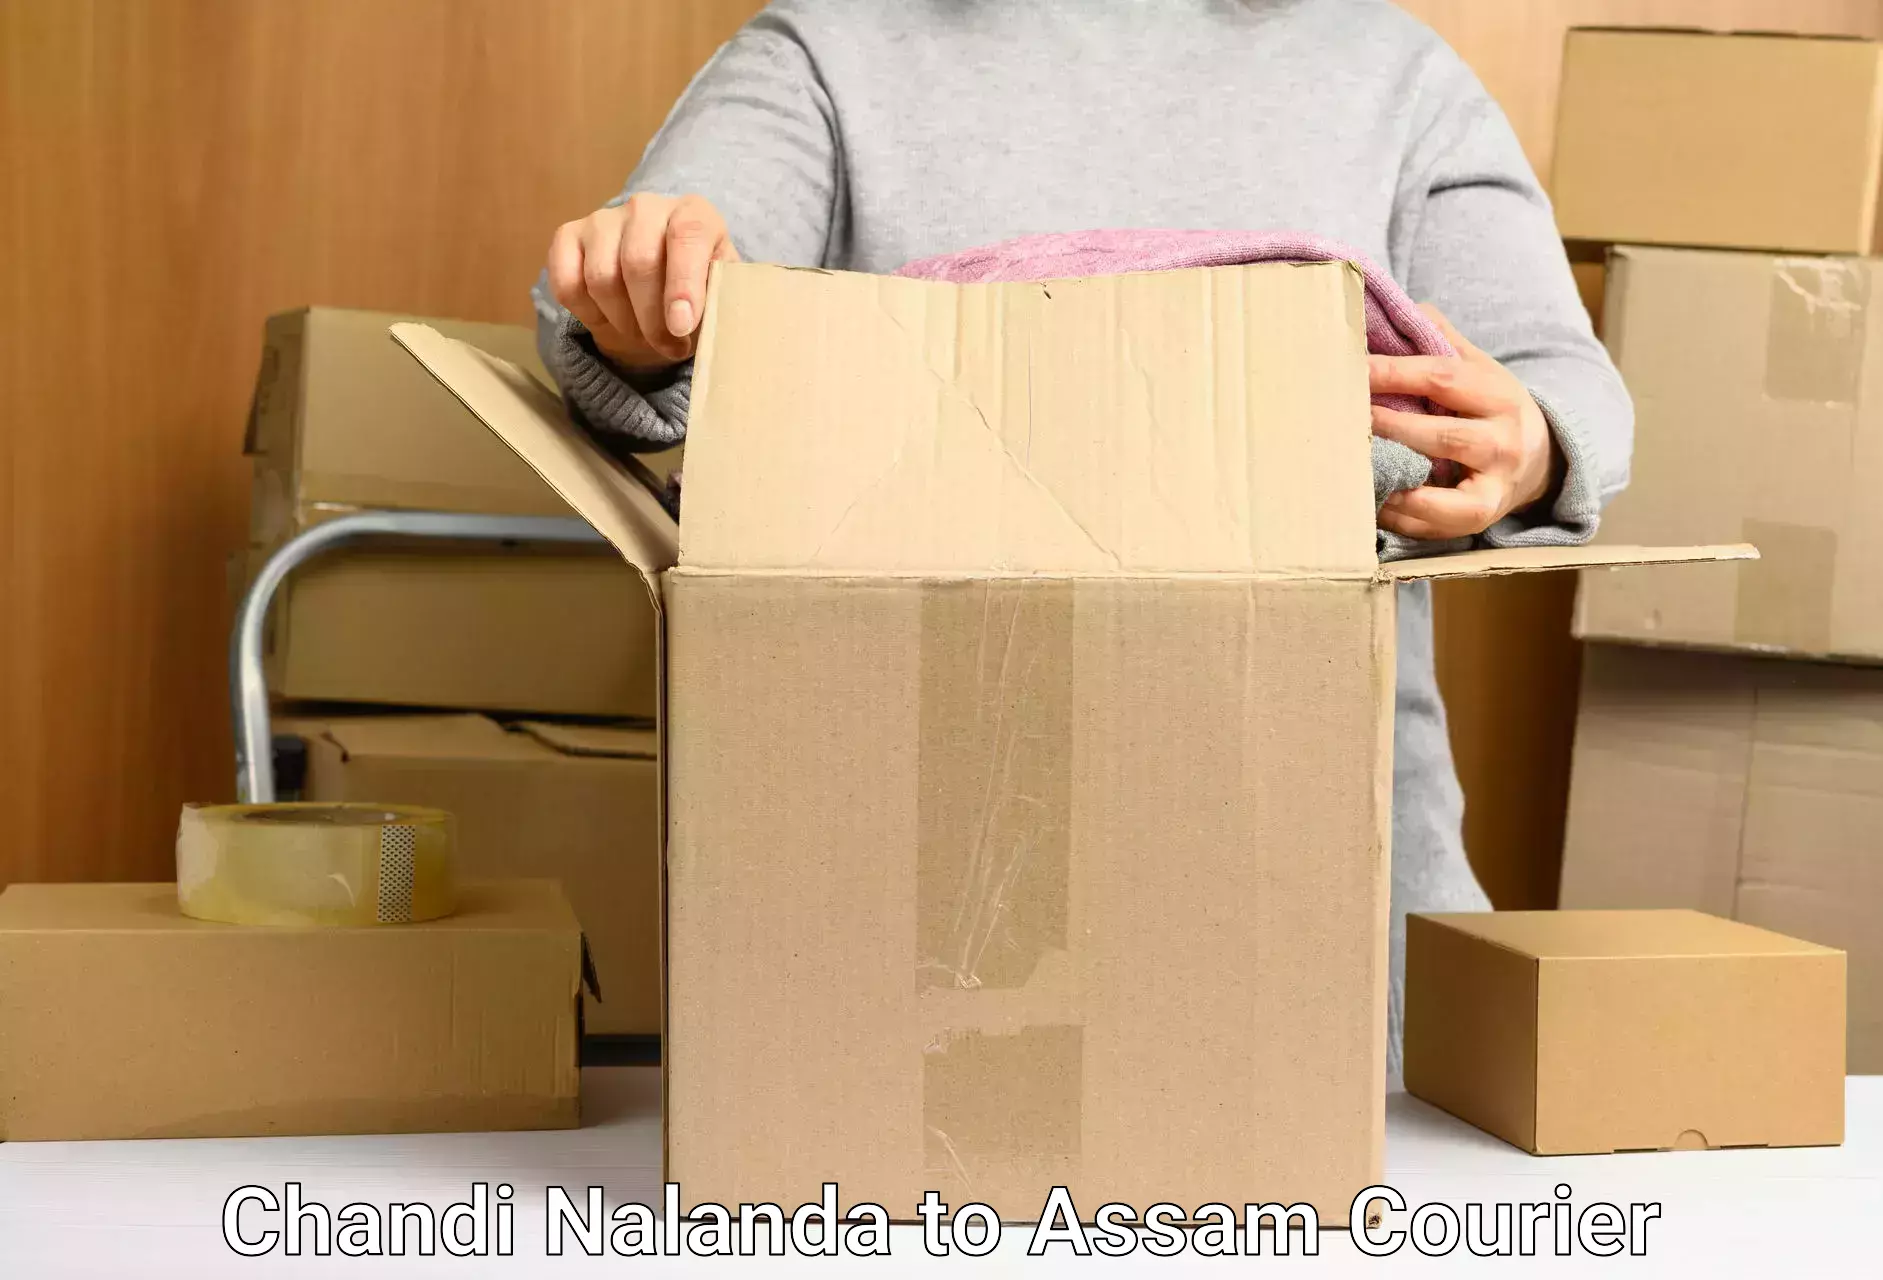 Professional courier handling Chandi Nalanda to Lala Assam